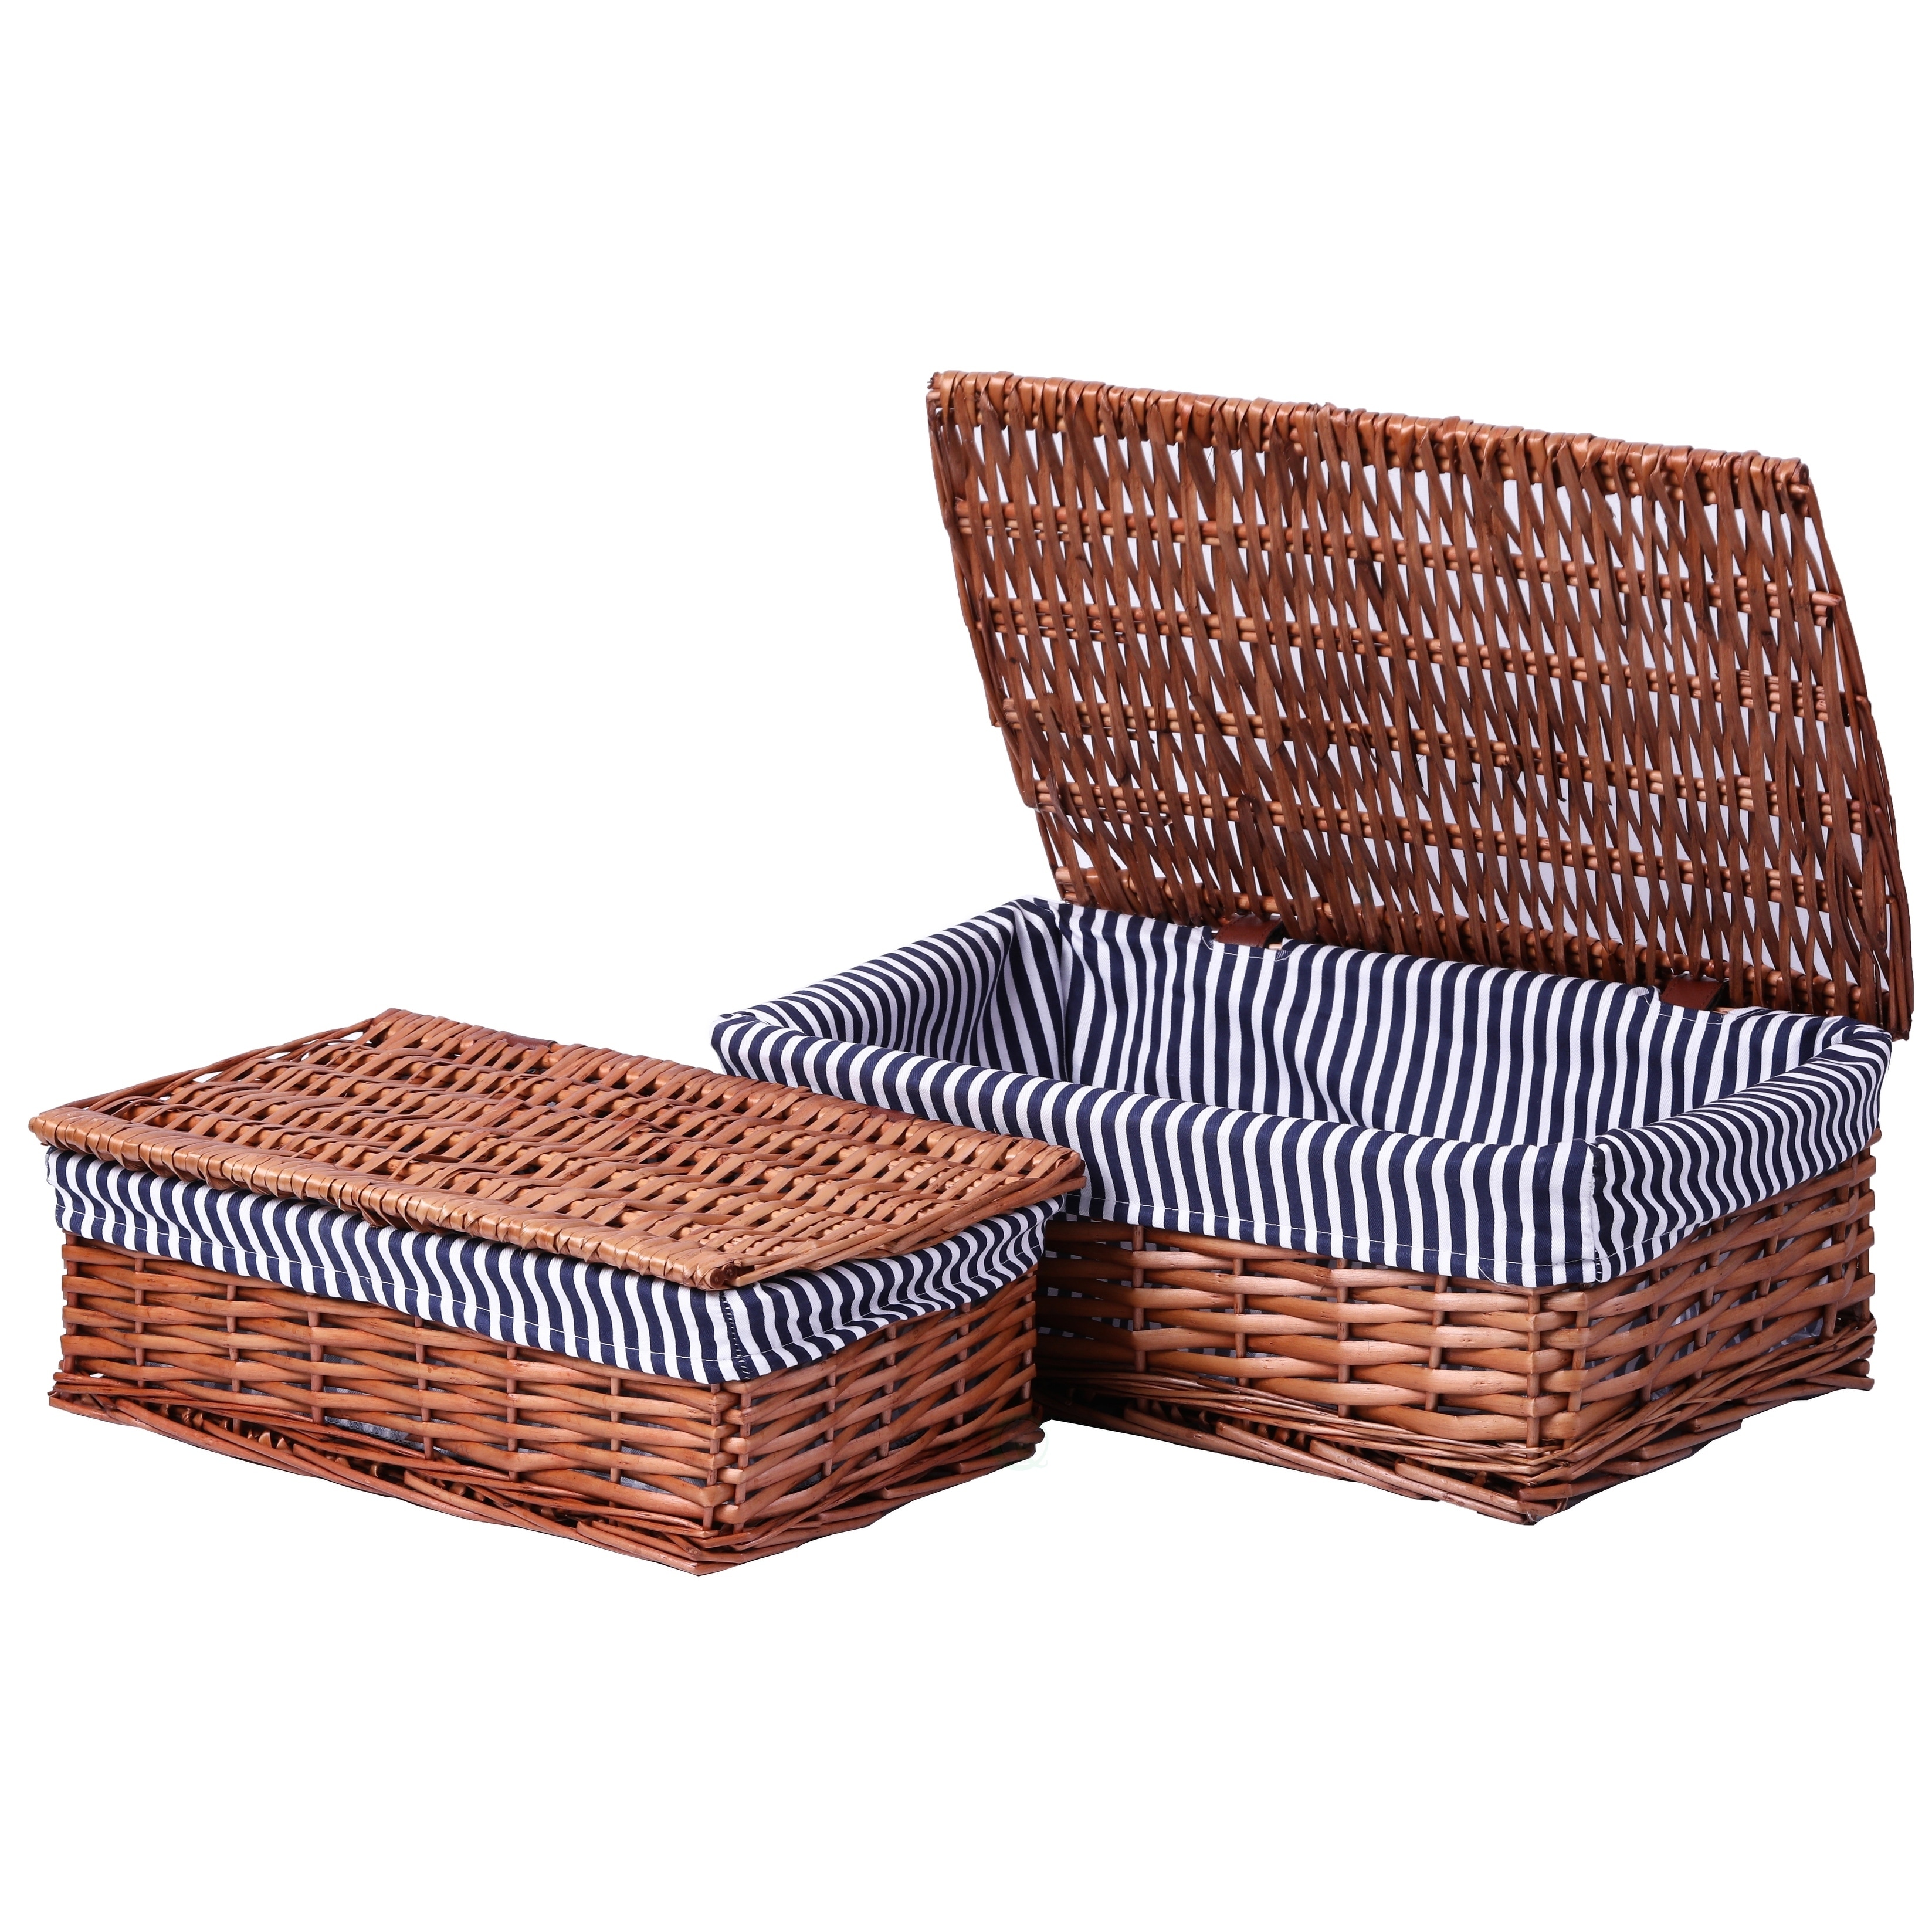 lined storage baskets for shelves